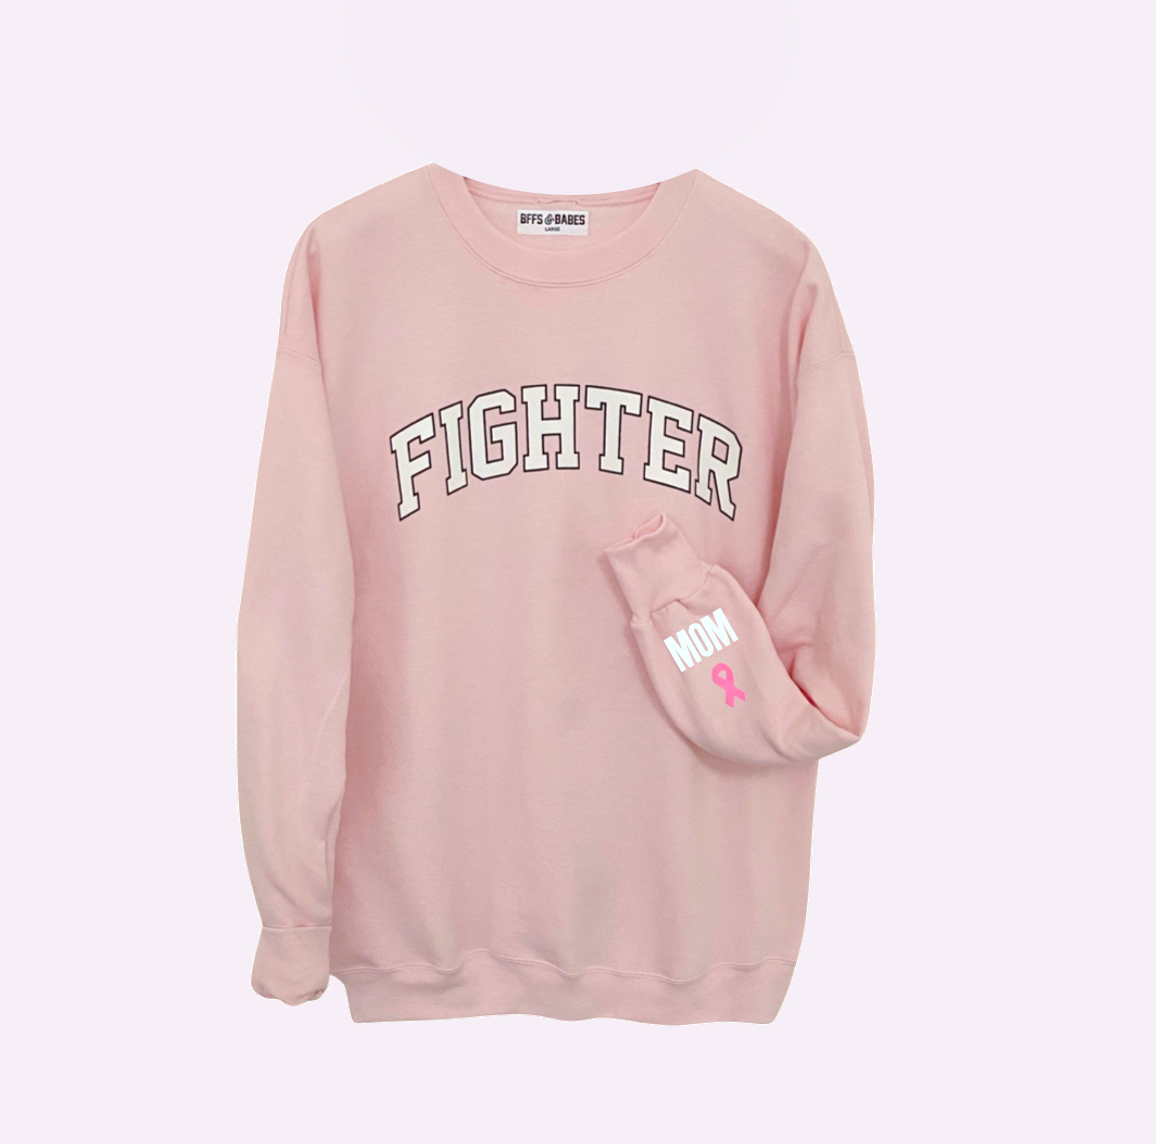 FIGHTER ♡ personalizable ribbon on the cuff sweatshirt